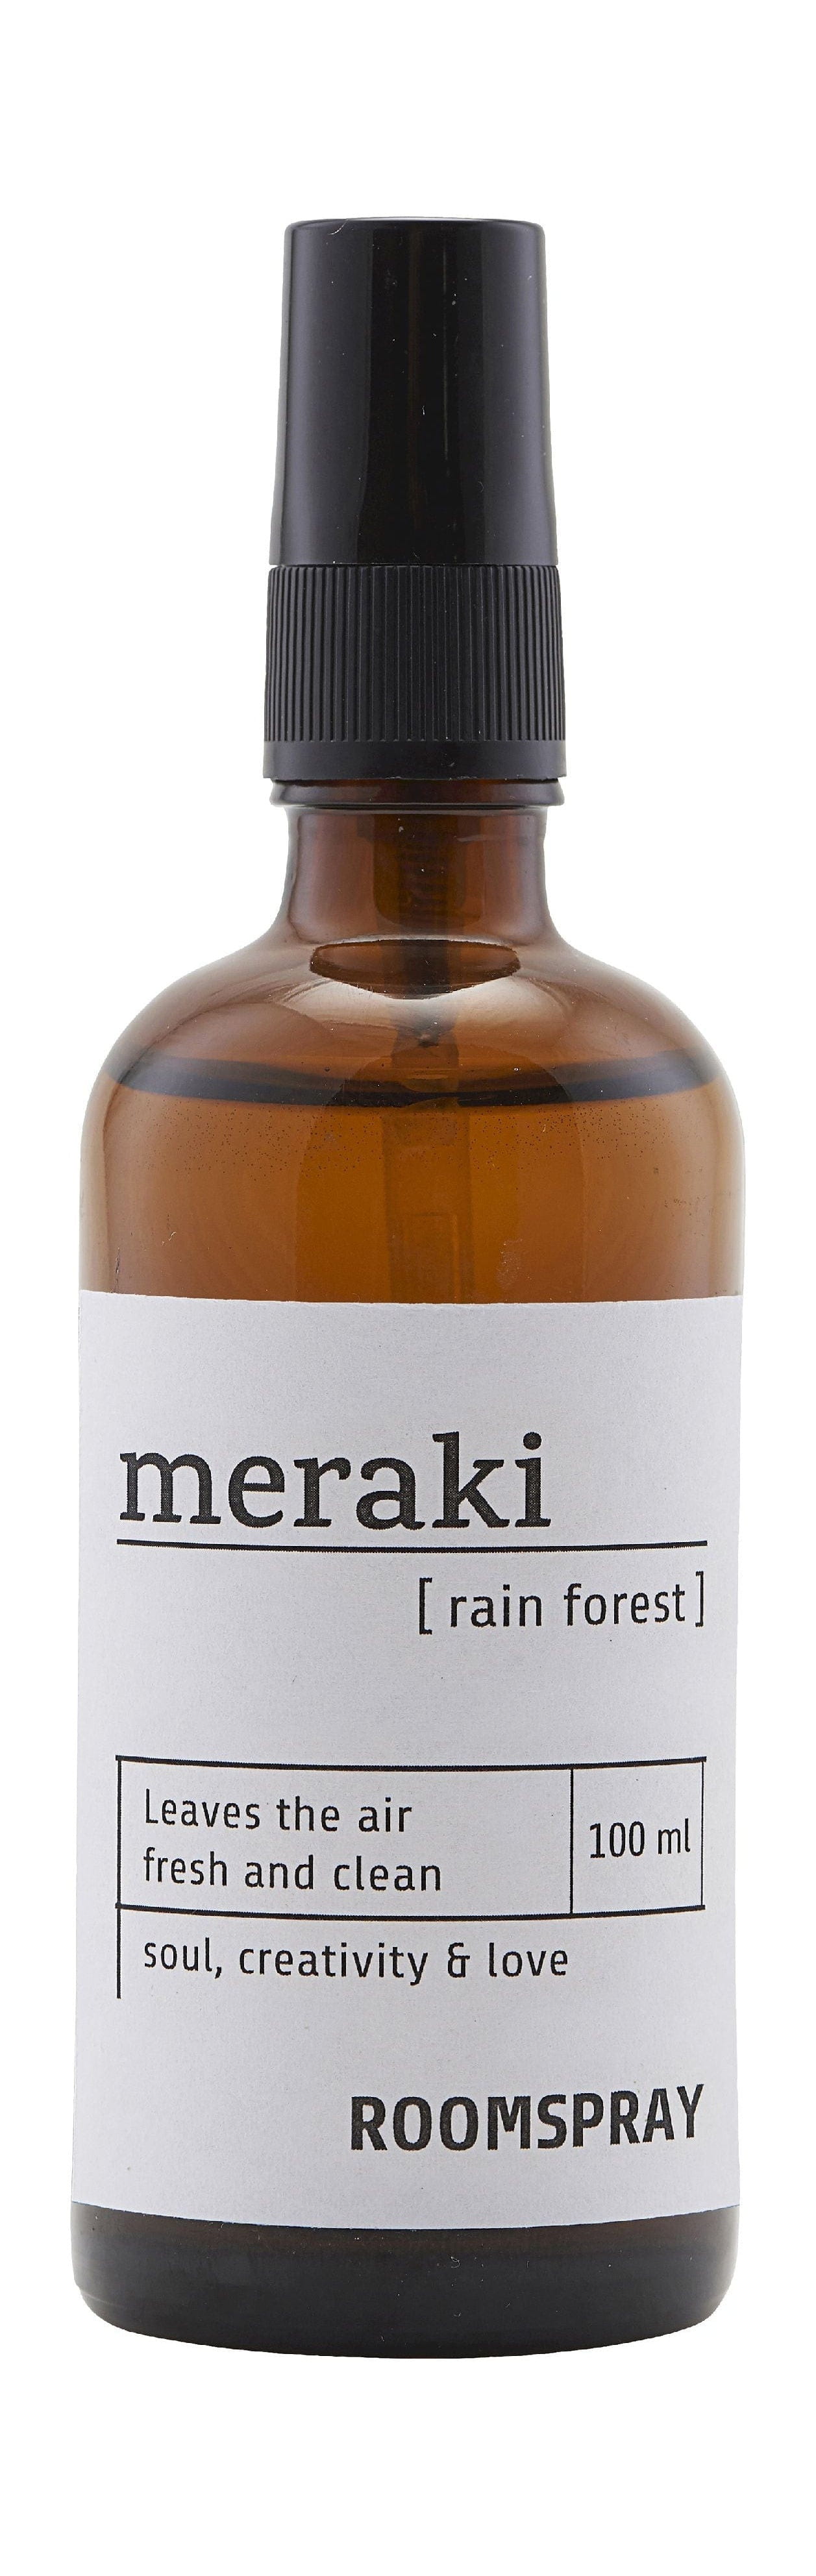 Meraki Room Spray 100 Ml, Rain Forest